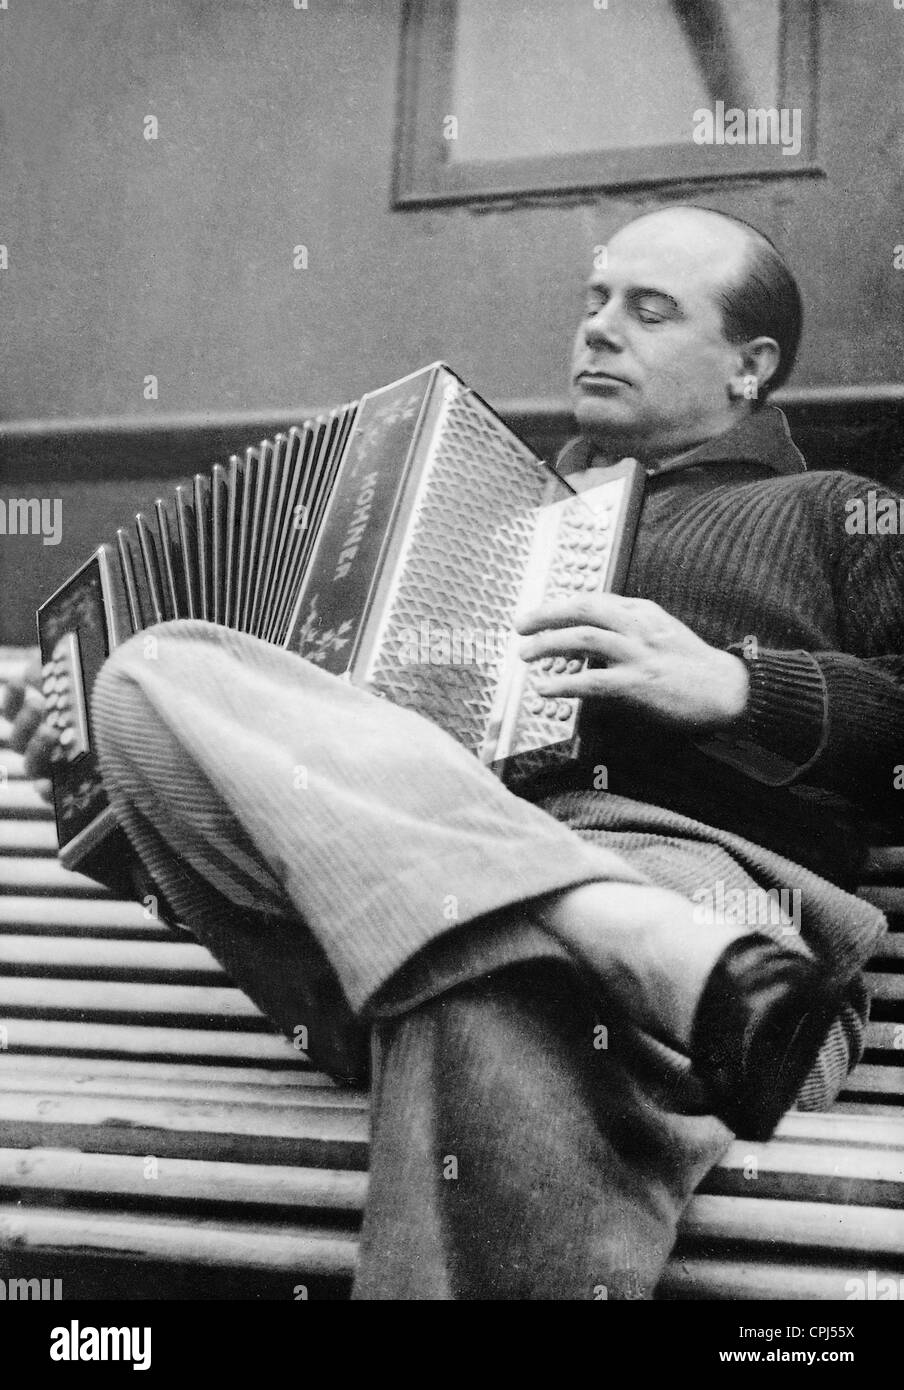 Ernst Udet playing the accordion Stock Photo